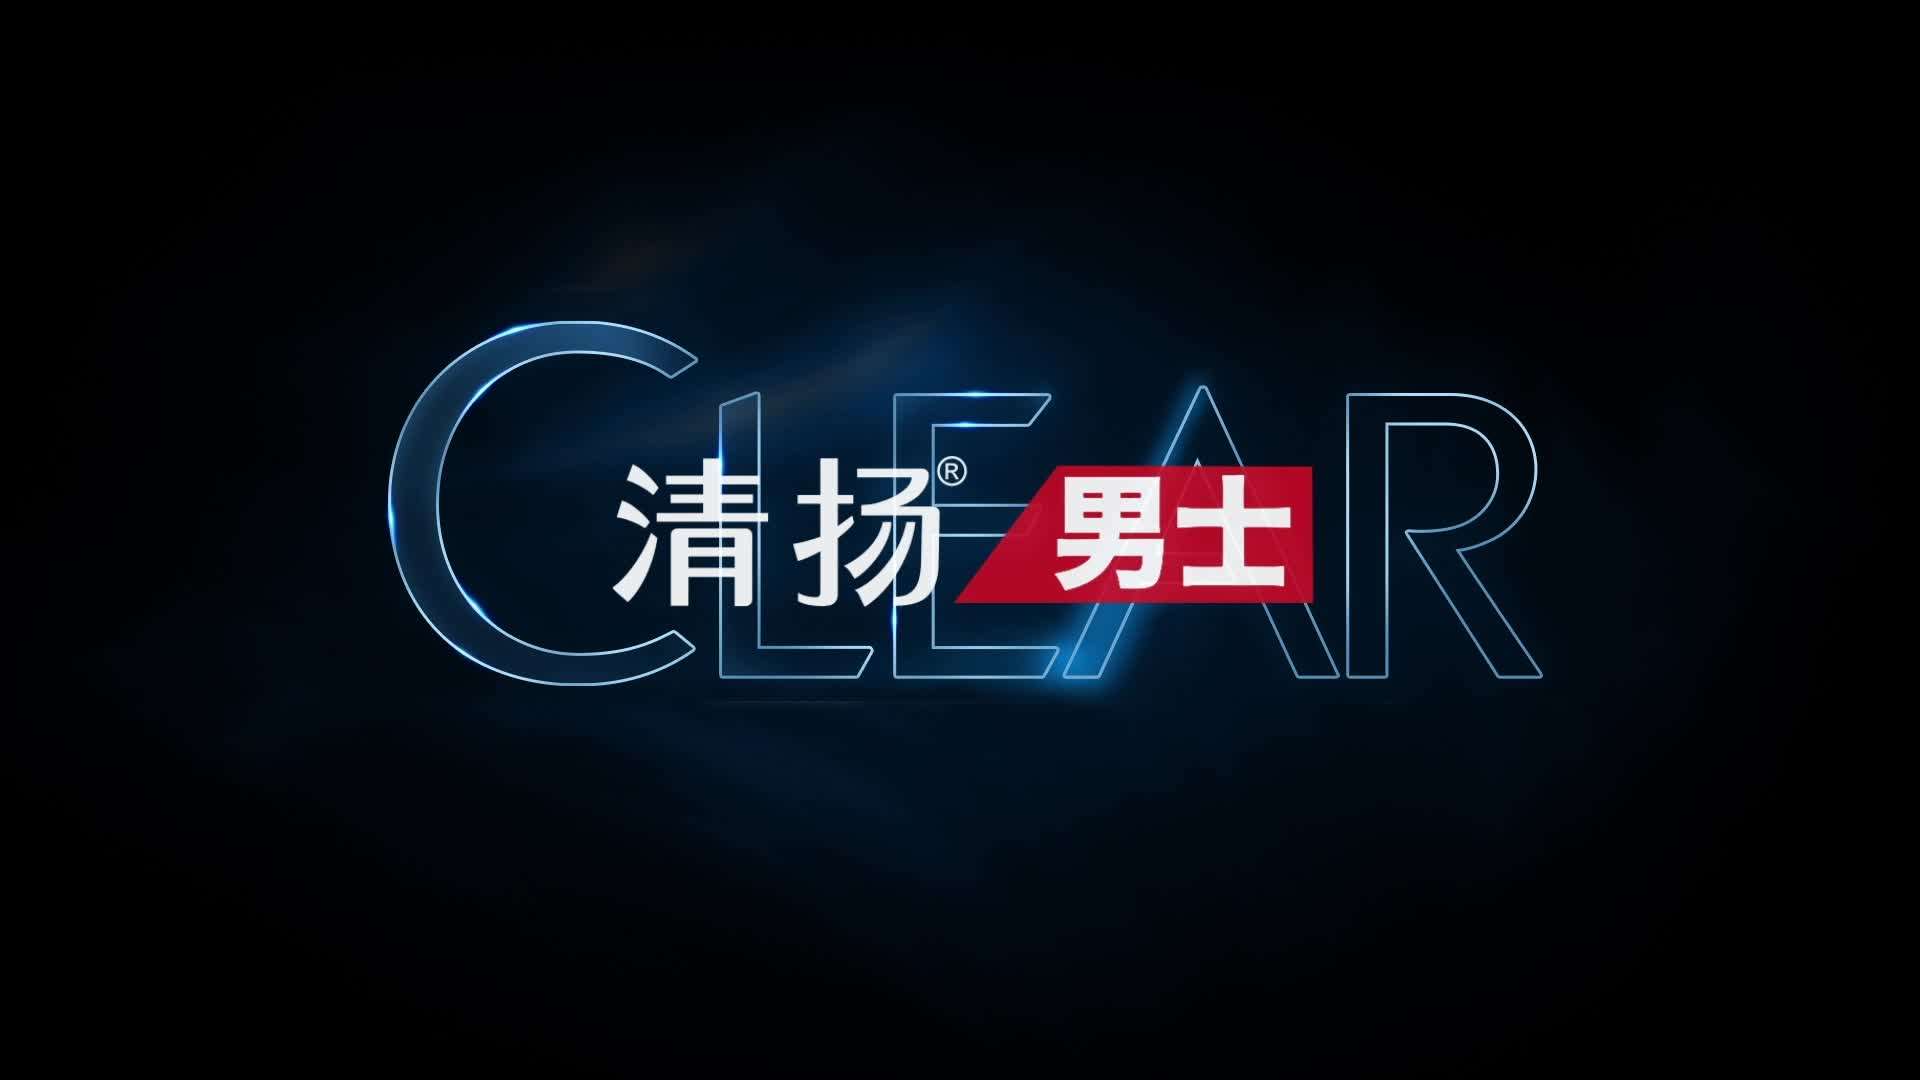 CLEAR_30s_MEN Videos